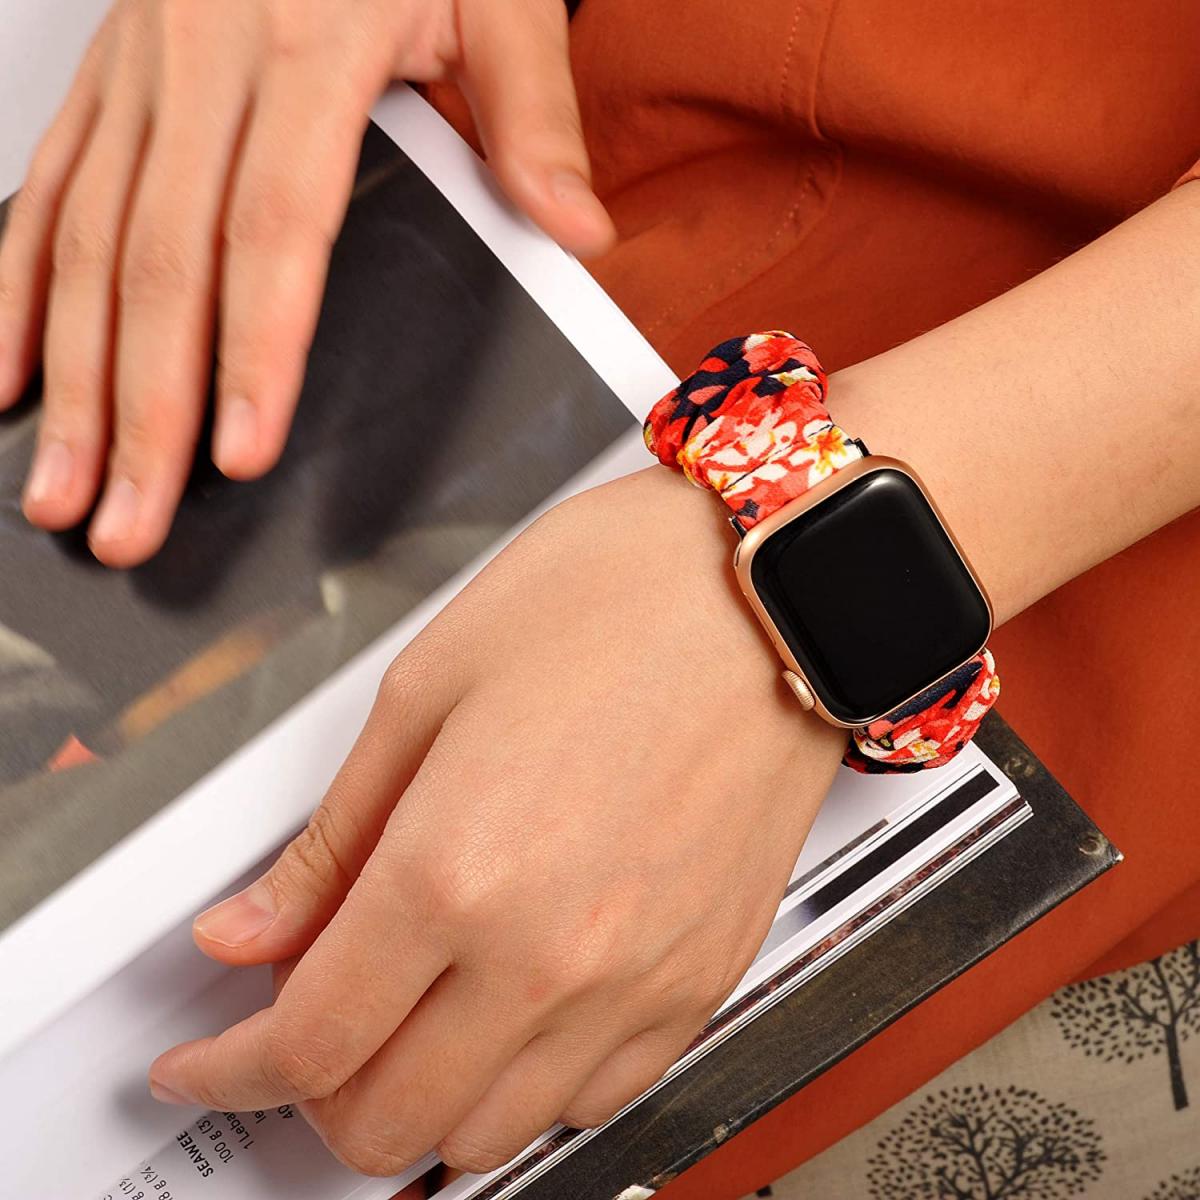 A-One Brand - Armband Scrunchie Apple Watch 1/2/3/4/5/6/SE 38/40mm Rosa Liljor